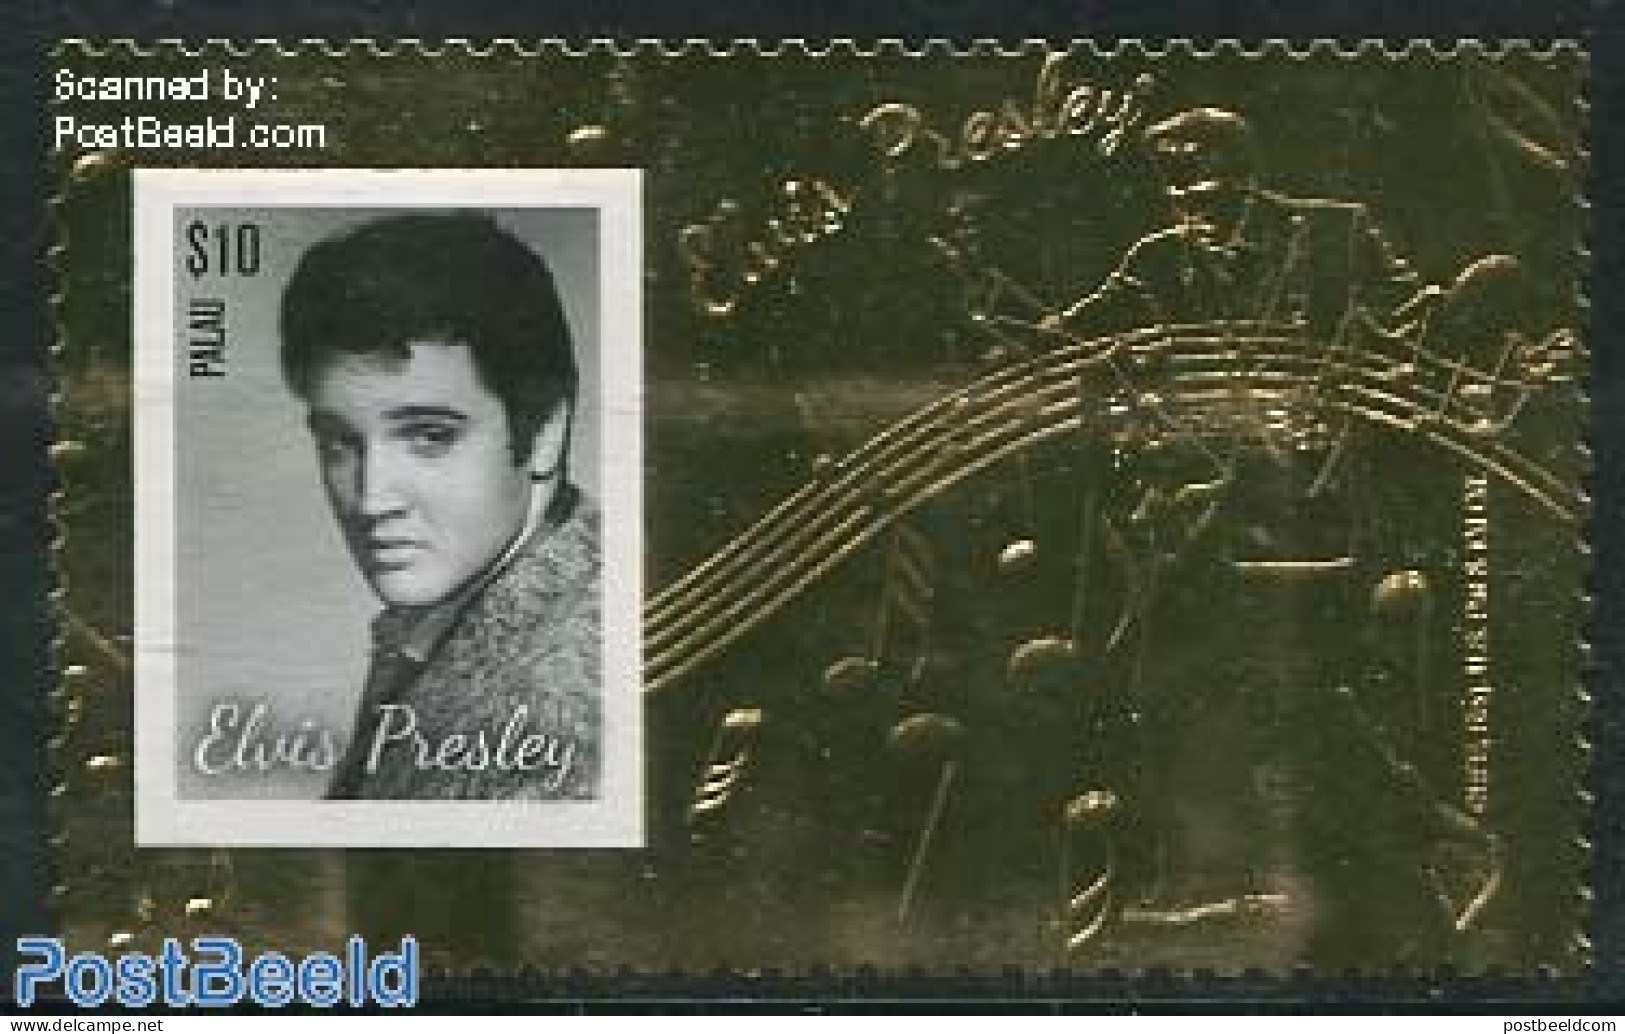 Palau 2013 Elvis Presley 1v, Gold, Mint NH, Performance Art - Elvis Presley - Music - Popular Music - Elvis Presley